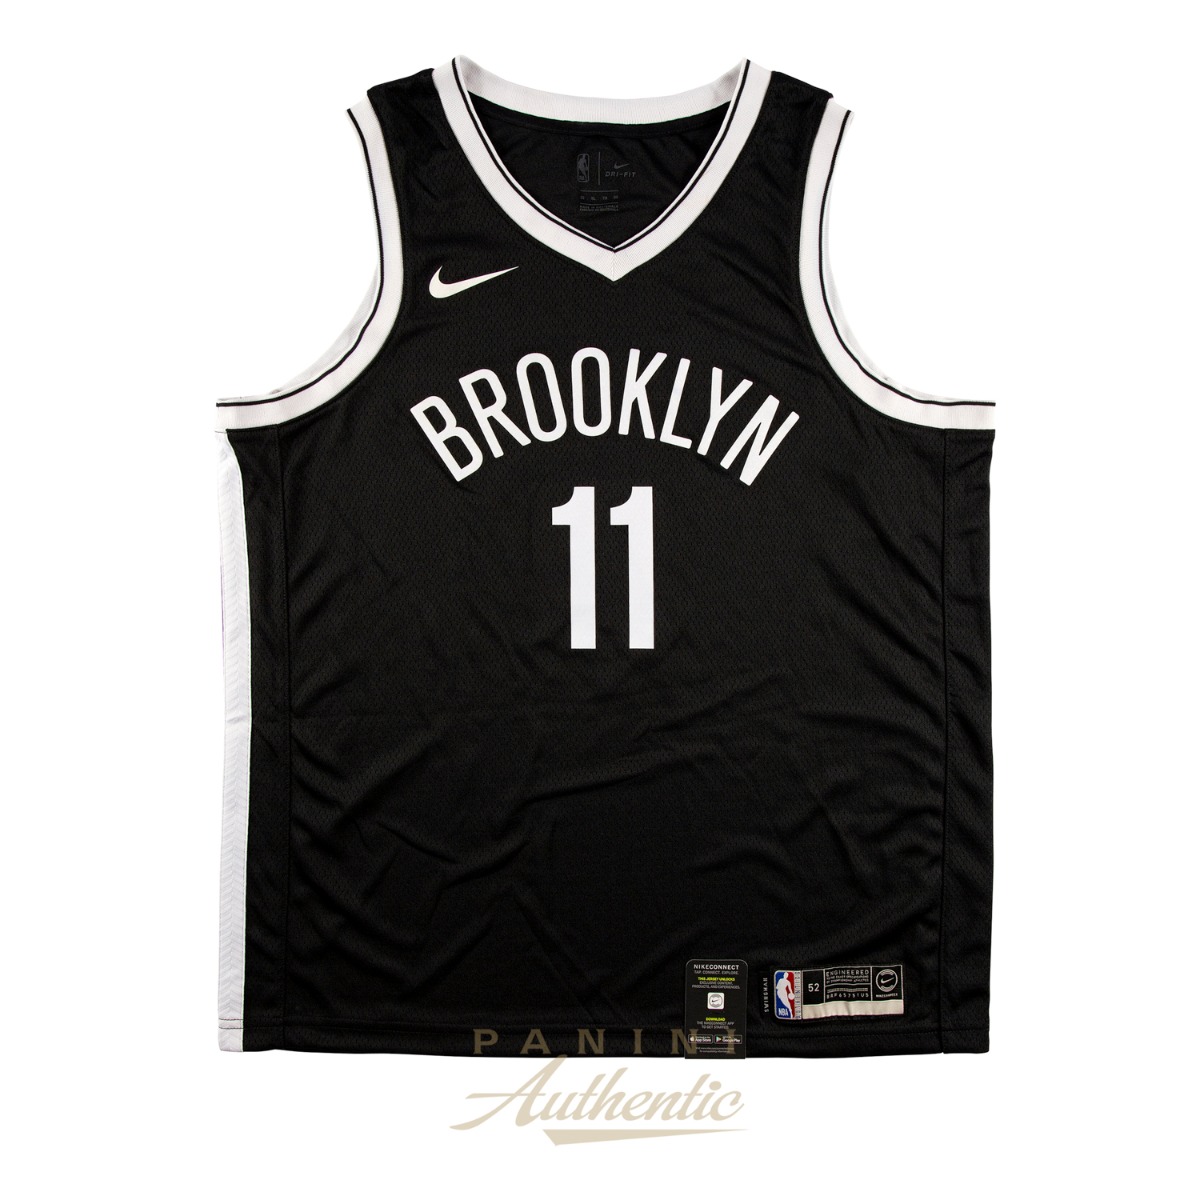 Kyrie Irving debuts retro Brooklyn 'New Jersey' jerseys